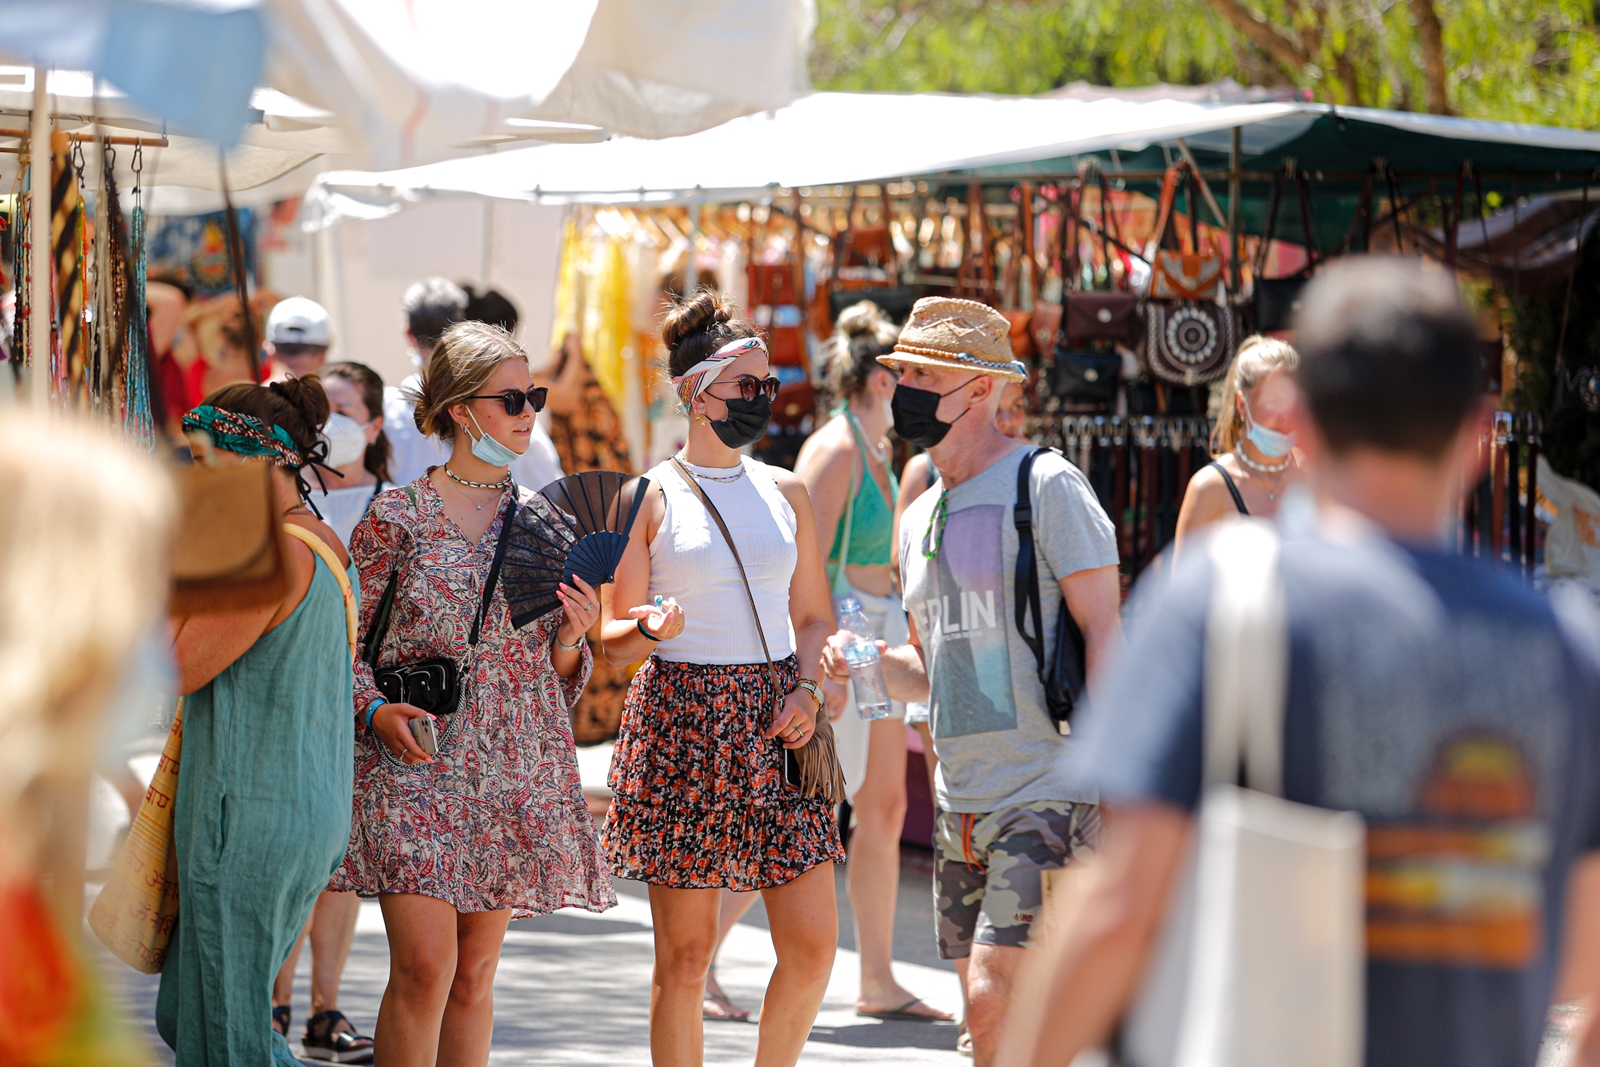 Ibiza's Punta Arabí flea market ends season on a high